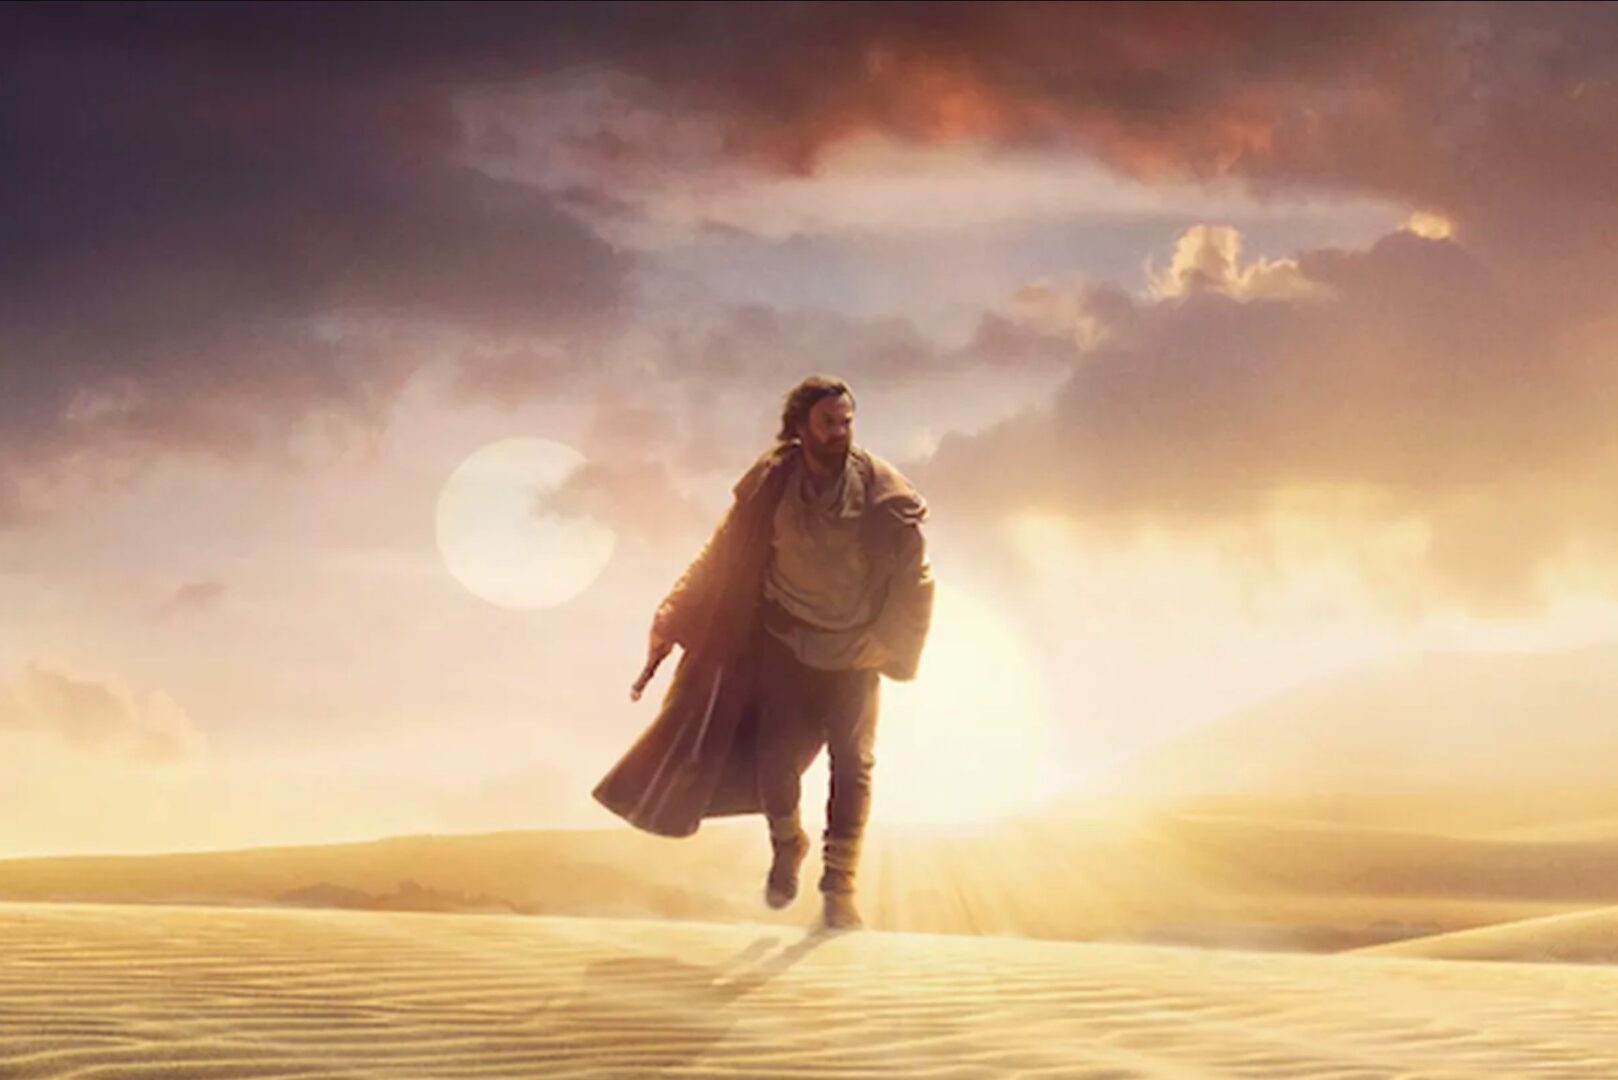 Obi-Wan Kenobi Series Debuts On Disney+ This May 25